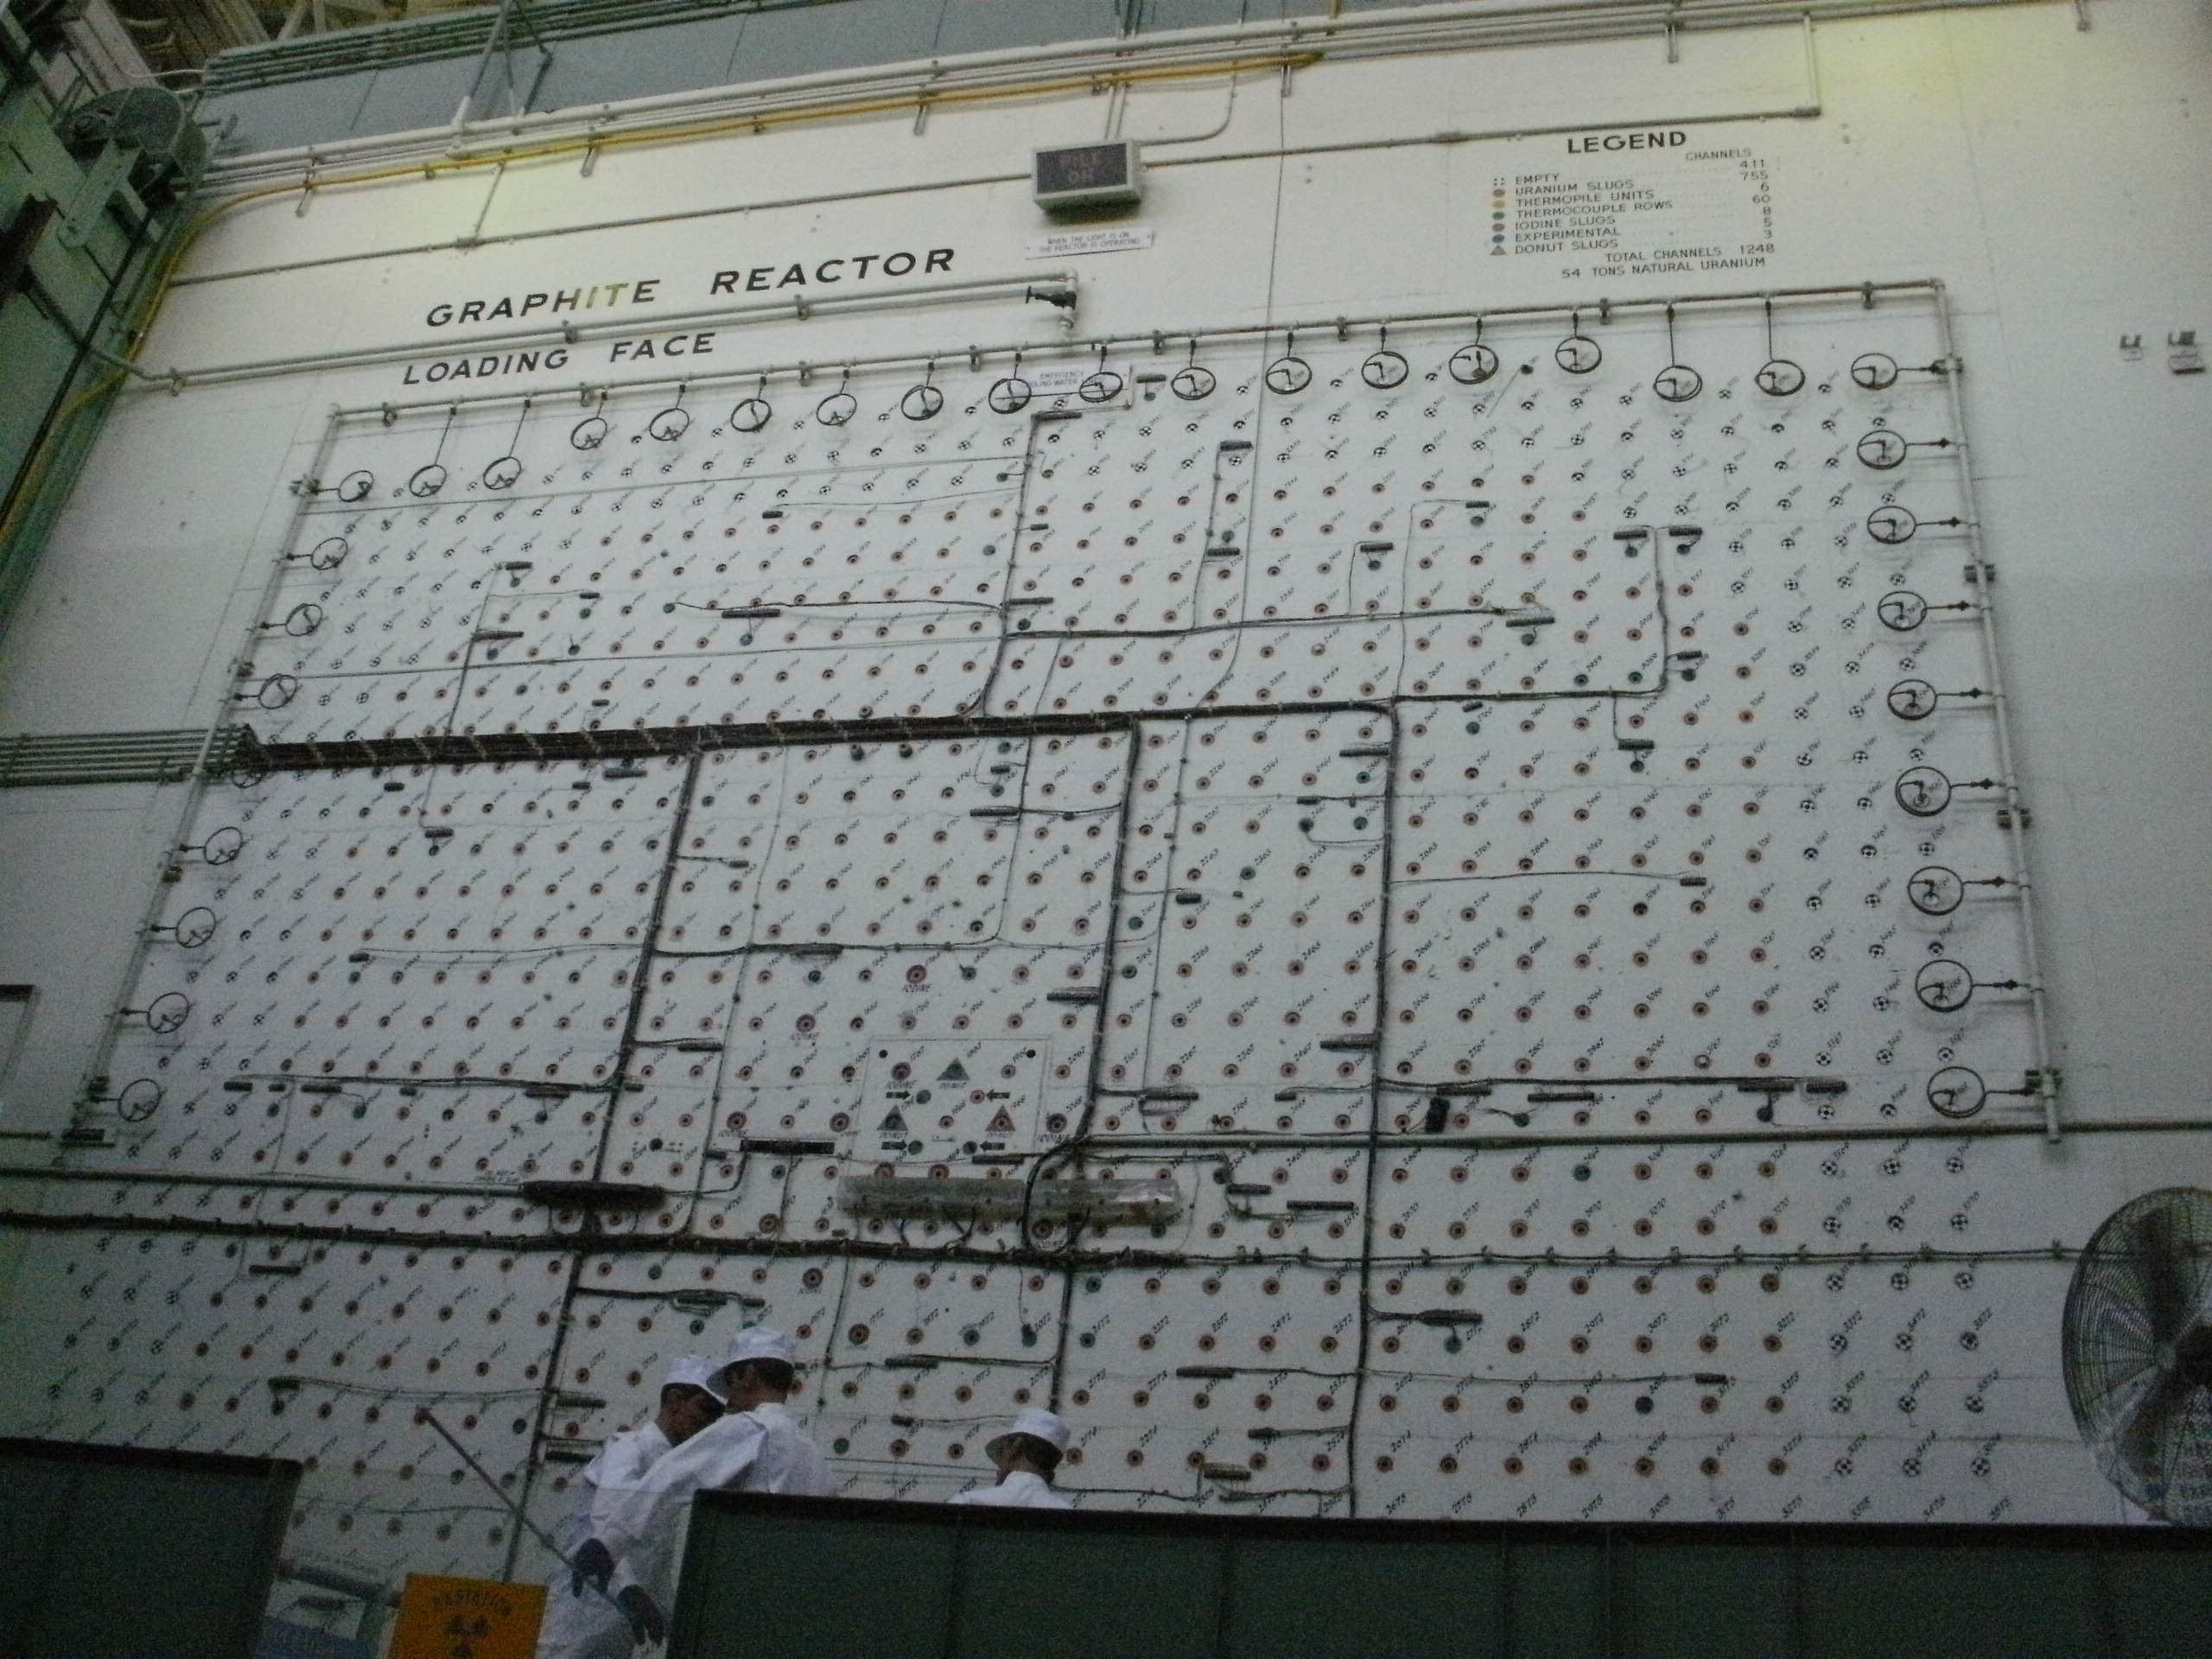 Loading face of the X-10 graphite reactor, Oak Ridge, Tennessee, United States, 27 Jul 2011